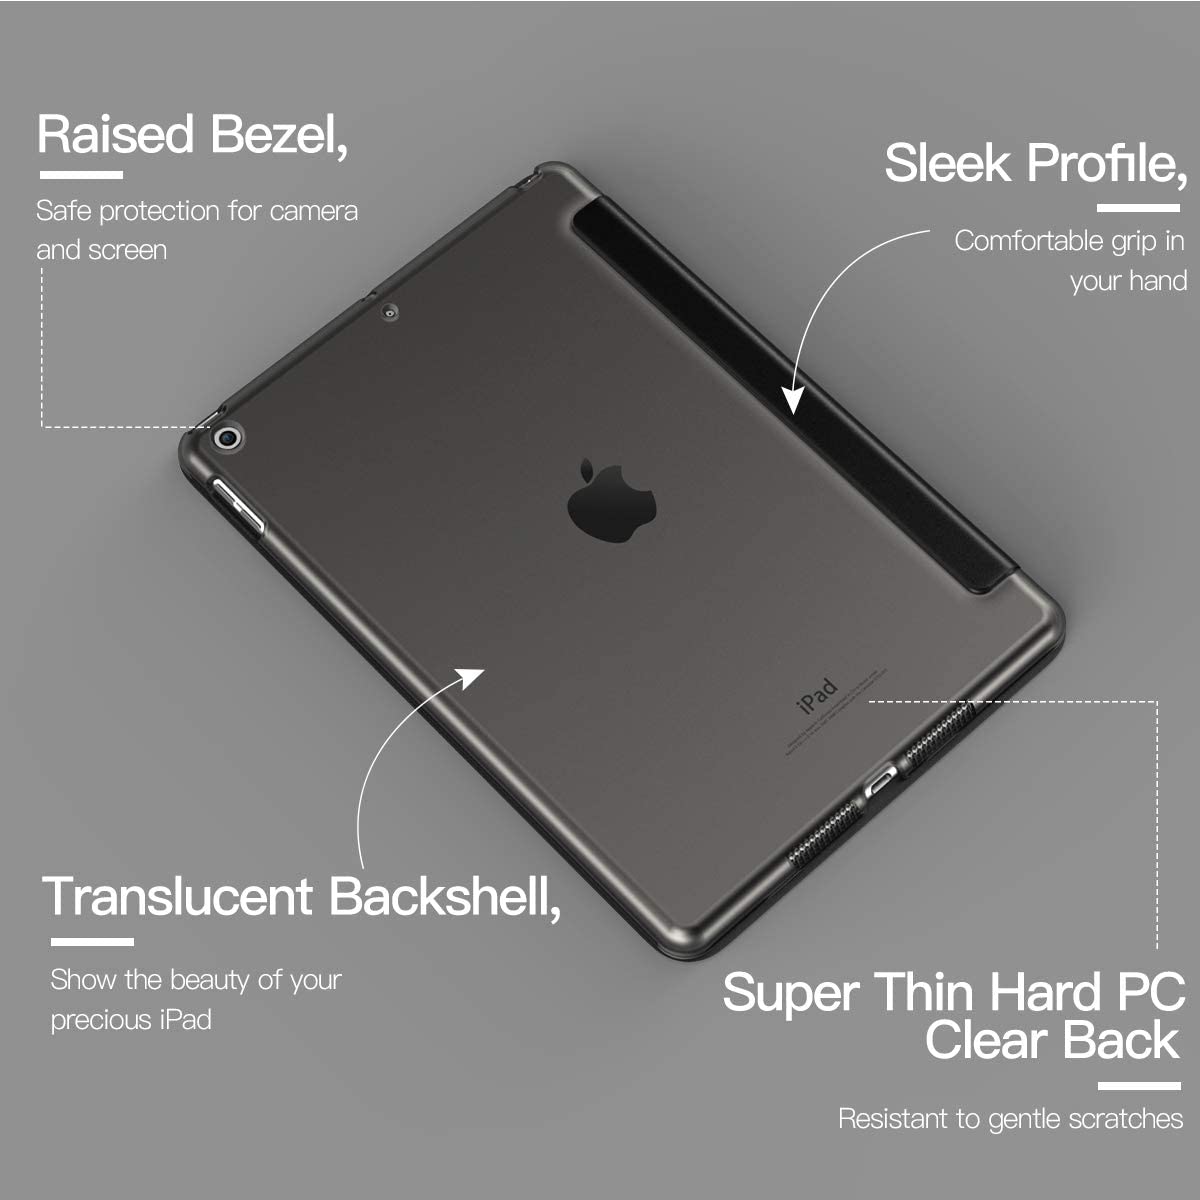 iPad Pro 10.5 Case, iPad Air 3rd Generation 10.5 inch 2019 Case, Ultra Slim Premium Leather Cover, Auto Sleep/Wake Full Body  Smart Case, - Black. - e4cents